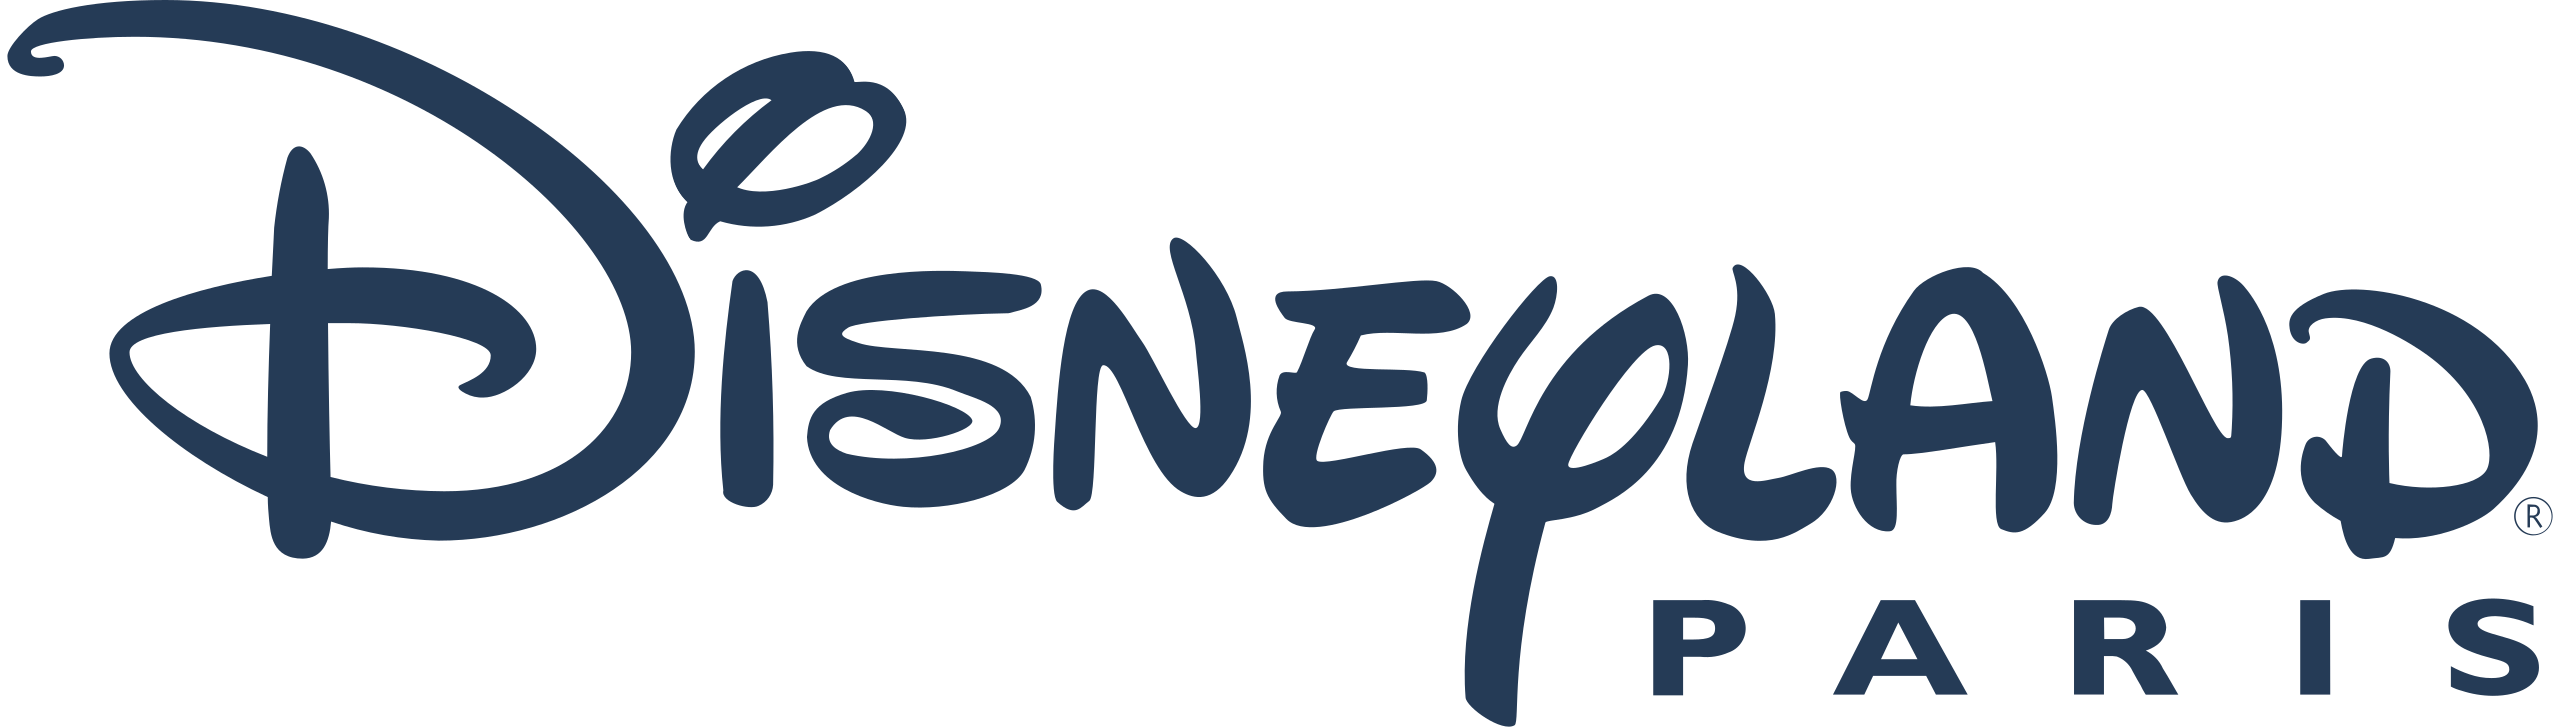 2560px-Disneyland_Paris_logo.svg